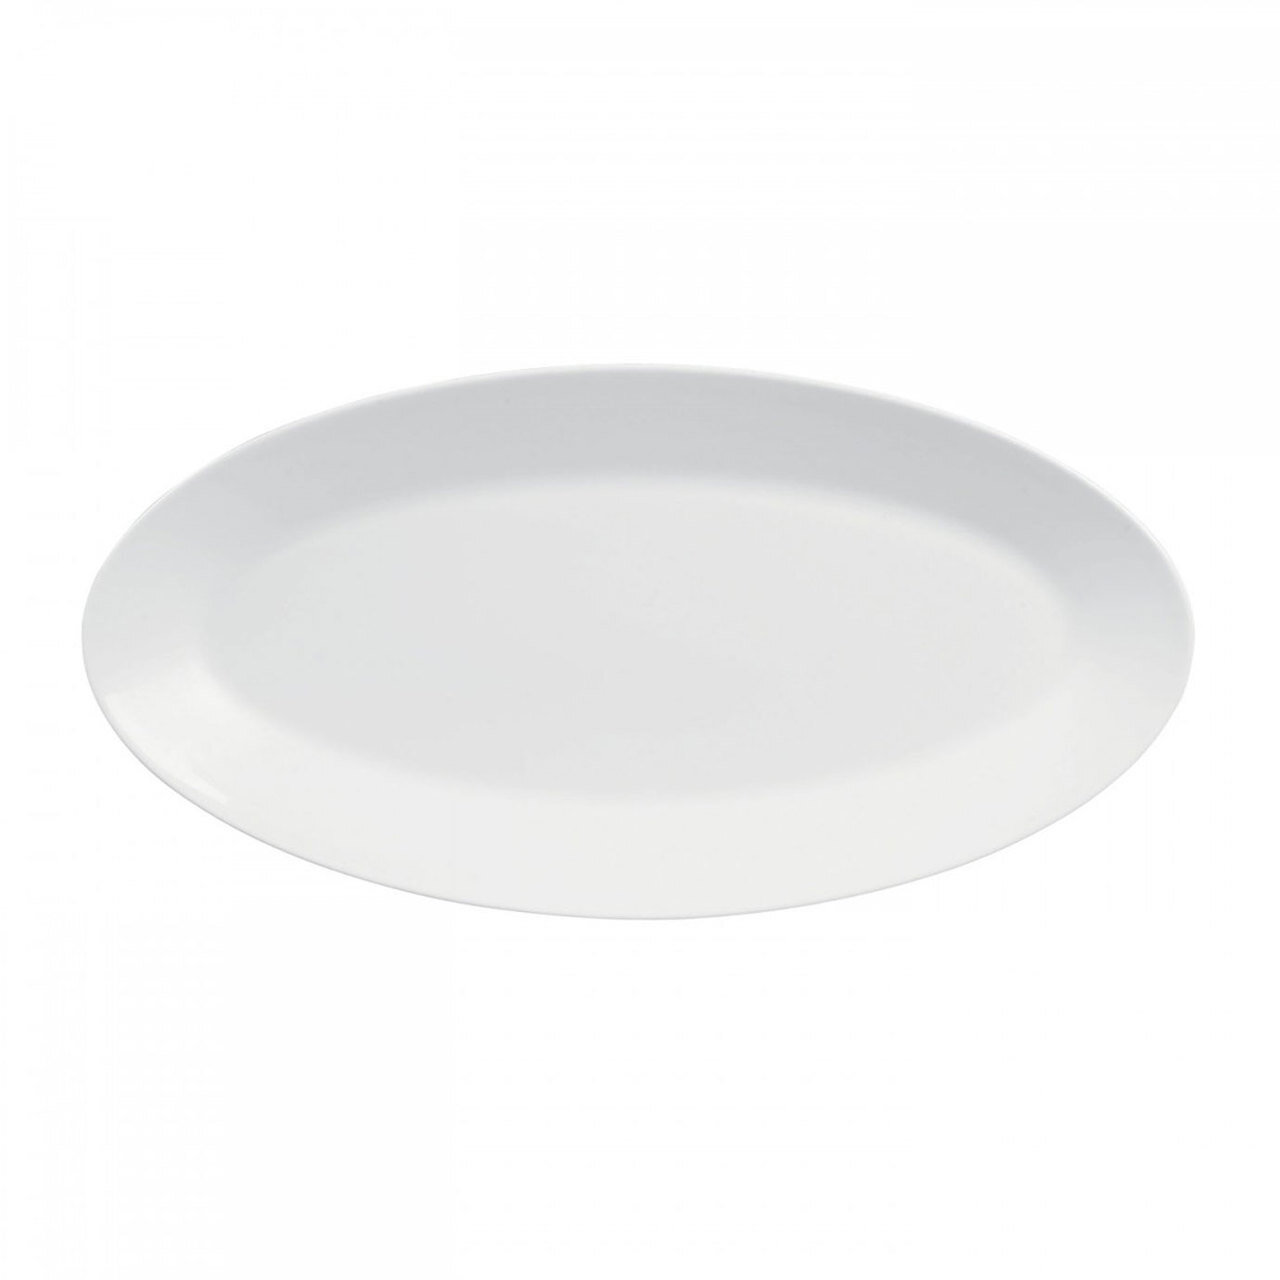 Wedgwood Jasper Conran White Bone China Oval Platter 15.5 Inch